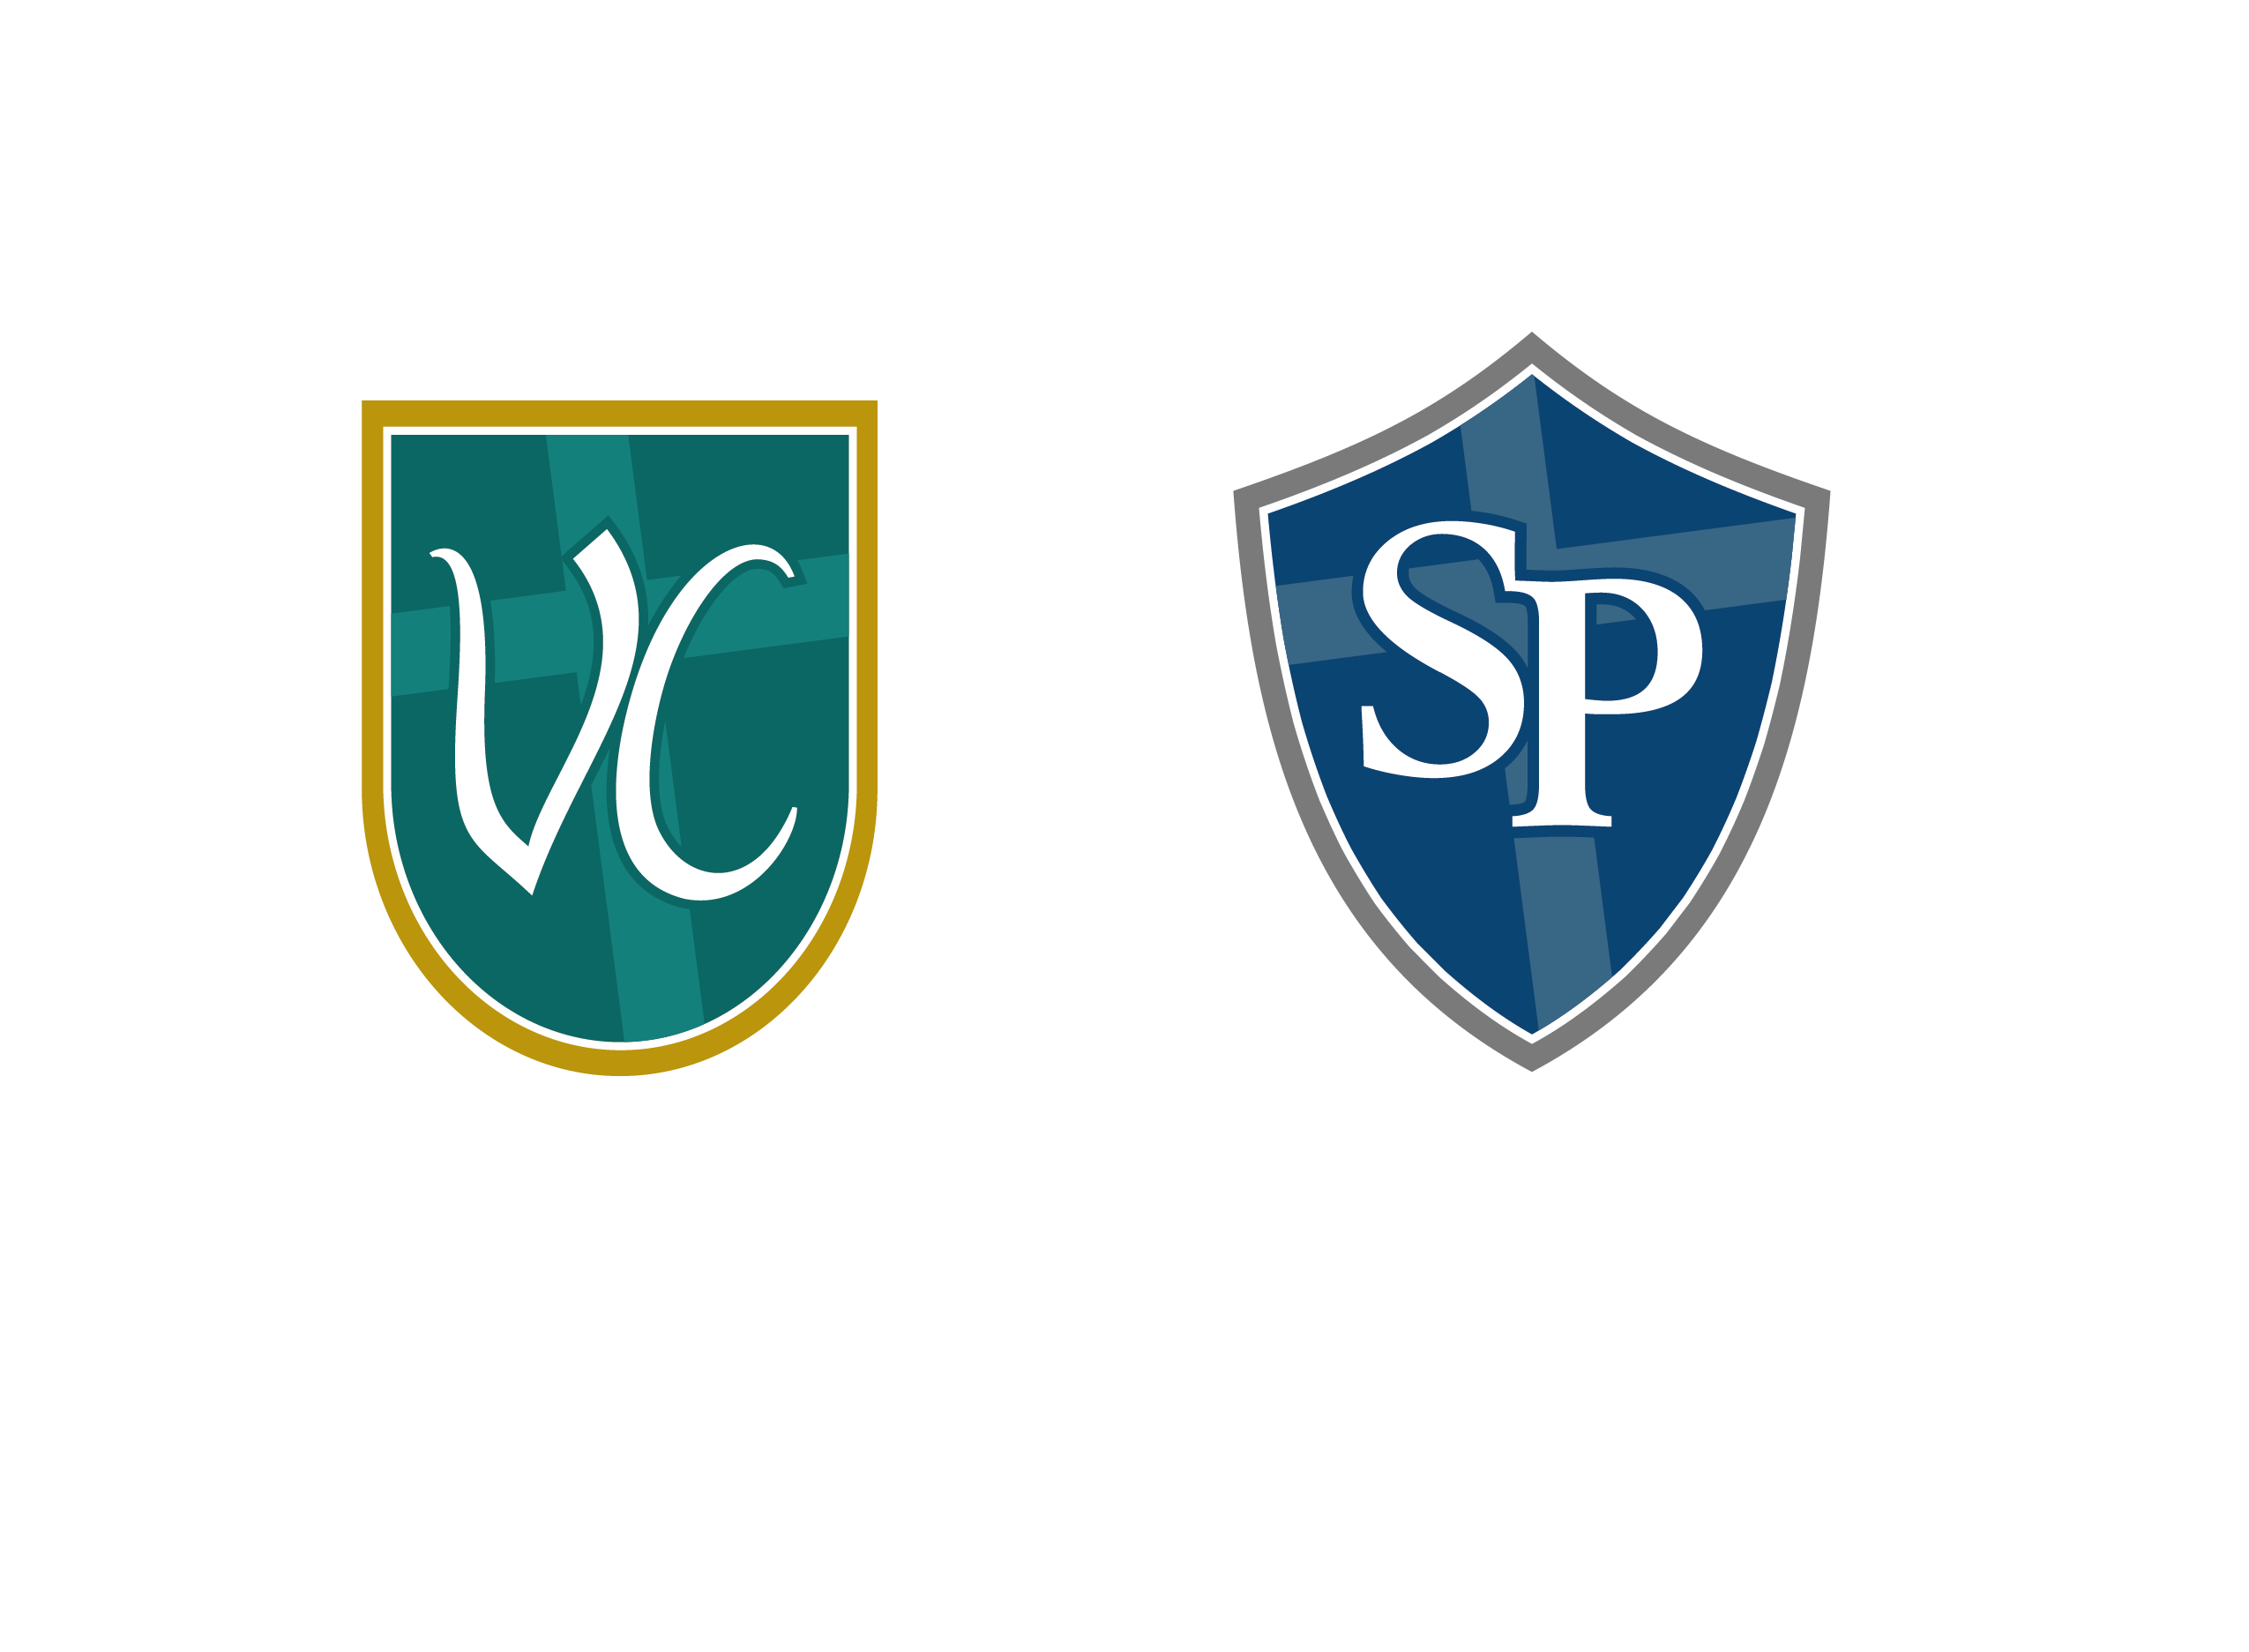 VCSP - Logo para uso sobre fondo de color_Mesa de trabajo 1